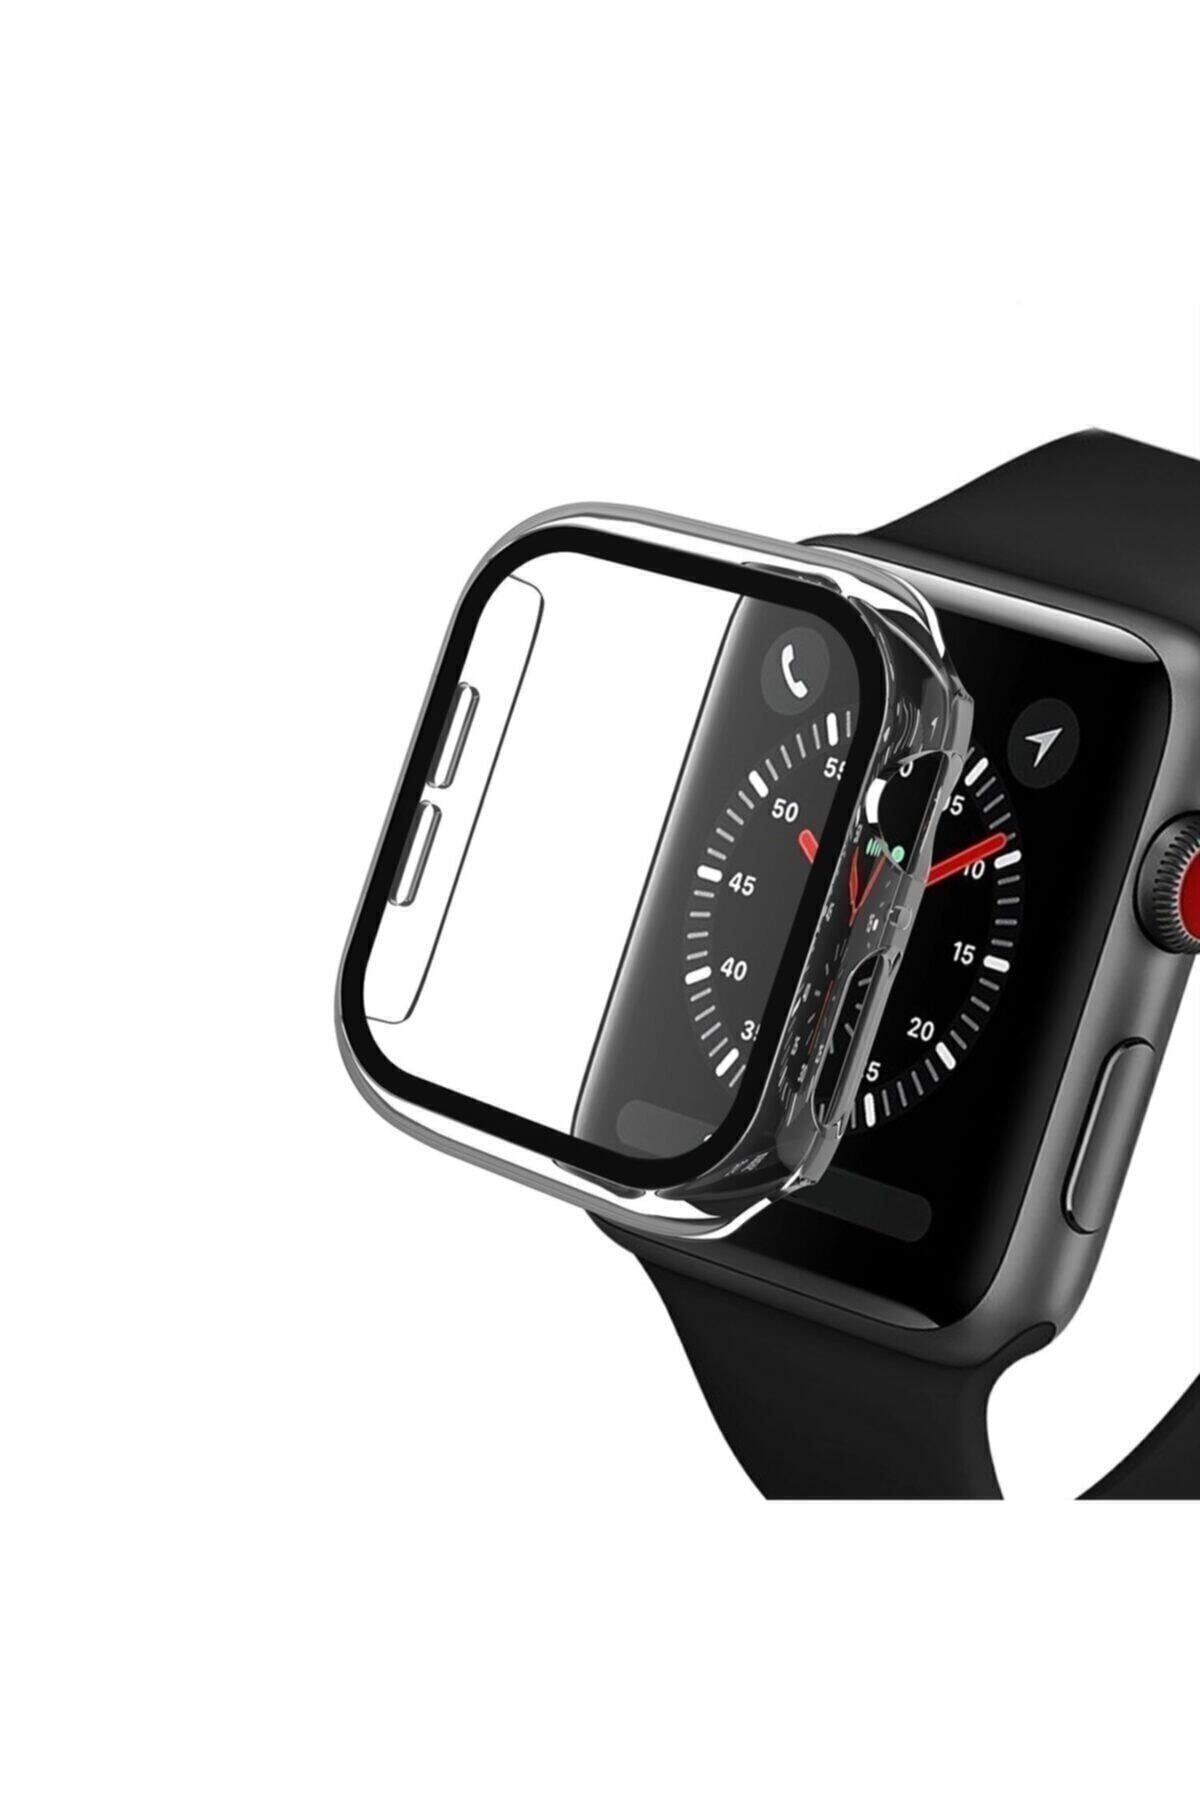 carecase Apple Watch Series Şeffaf Renk Sert Silikon Kılıf 44 Mm Tam Koruma